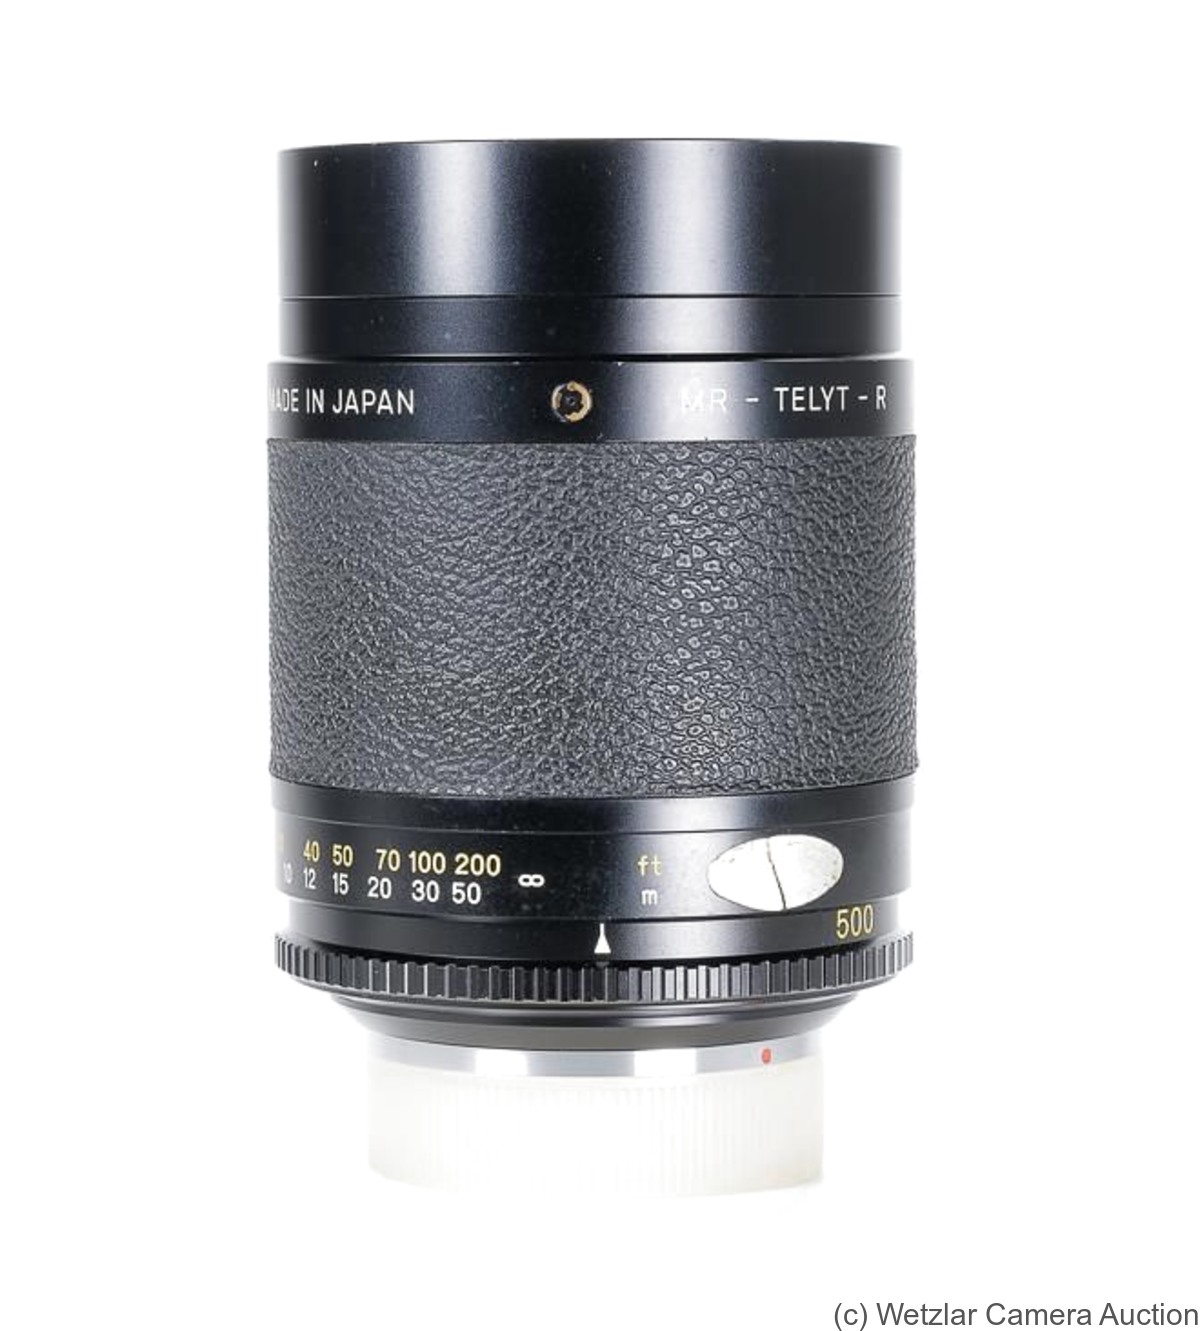 Leitz: 500mm (50cm) f8 MR-Telyt-R (prototype) camera